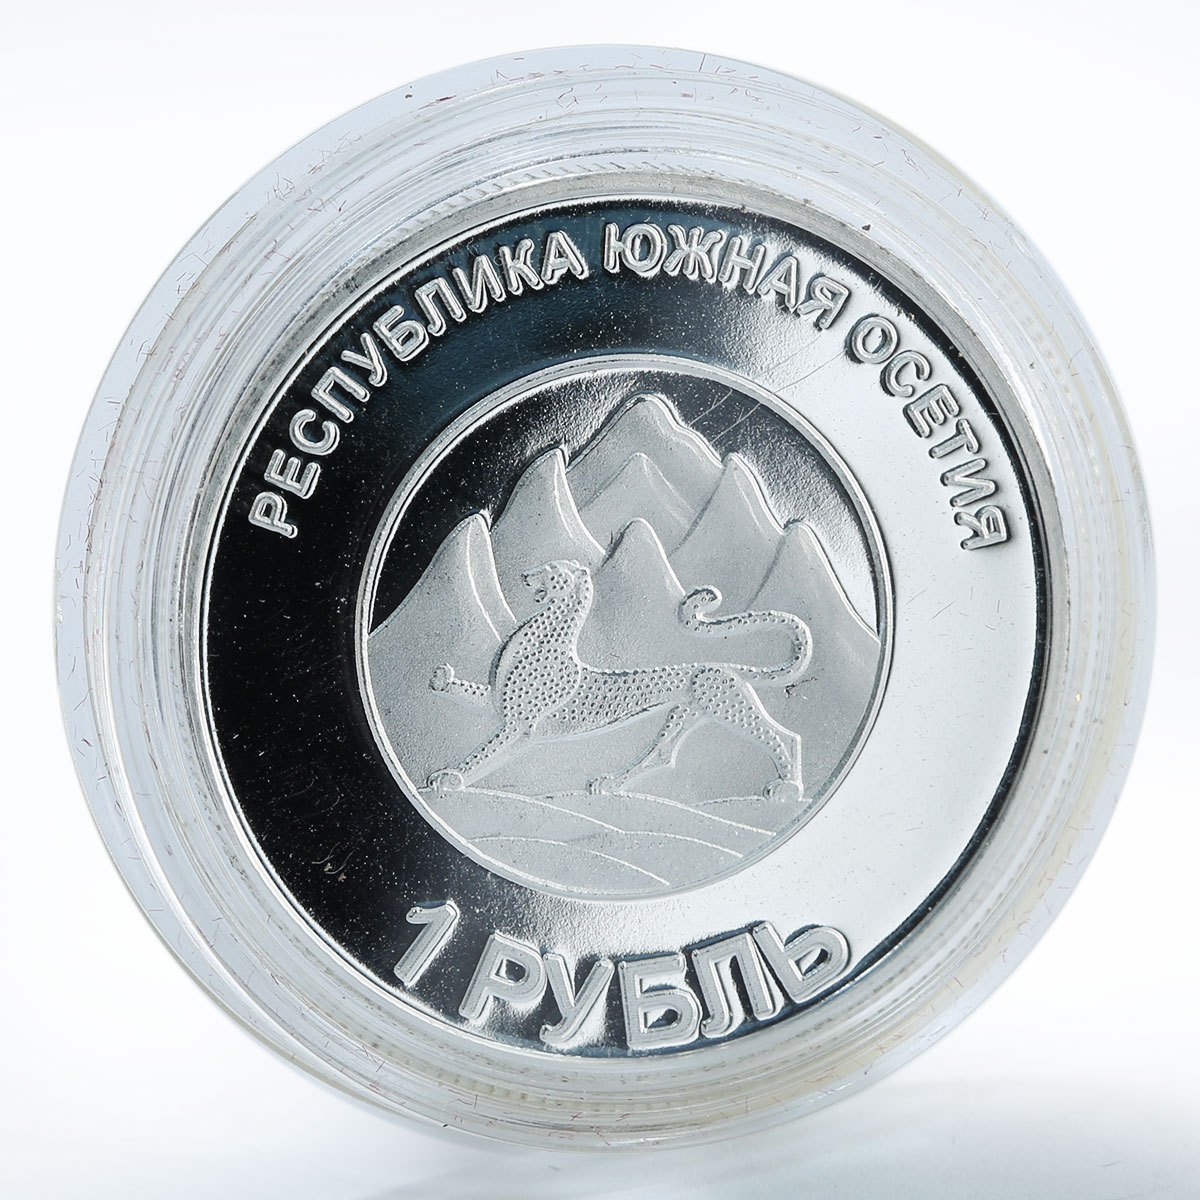 South Ossetia Republic, Russia, Georgia, 1 Ruble, Dmitriy Medvedev, 2013